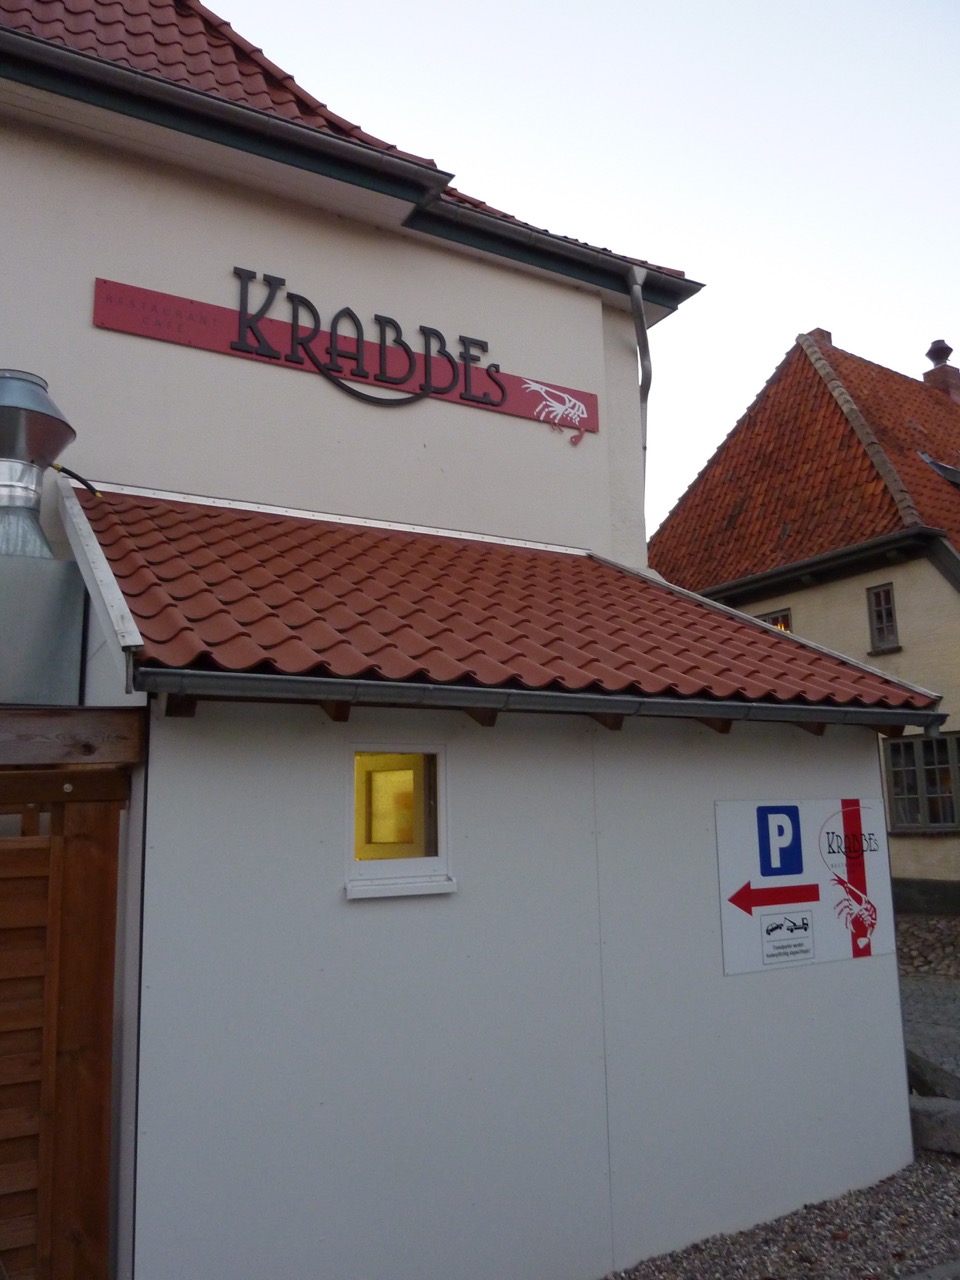 Bild 8 Krabbes Restaurant in Neustadt in Holstein